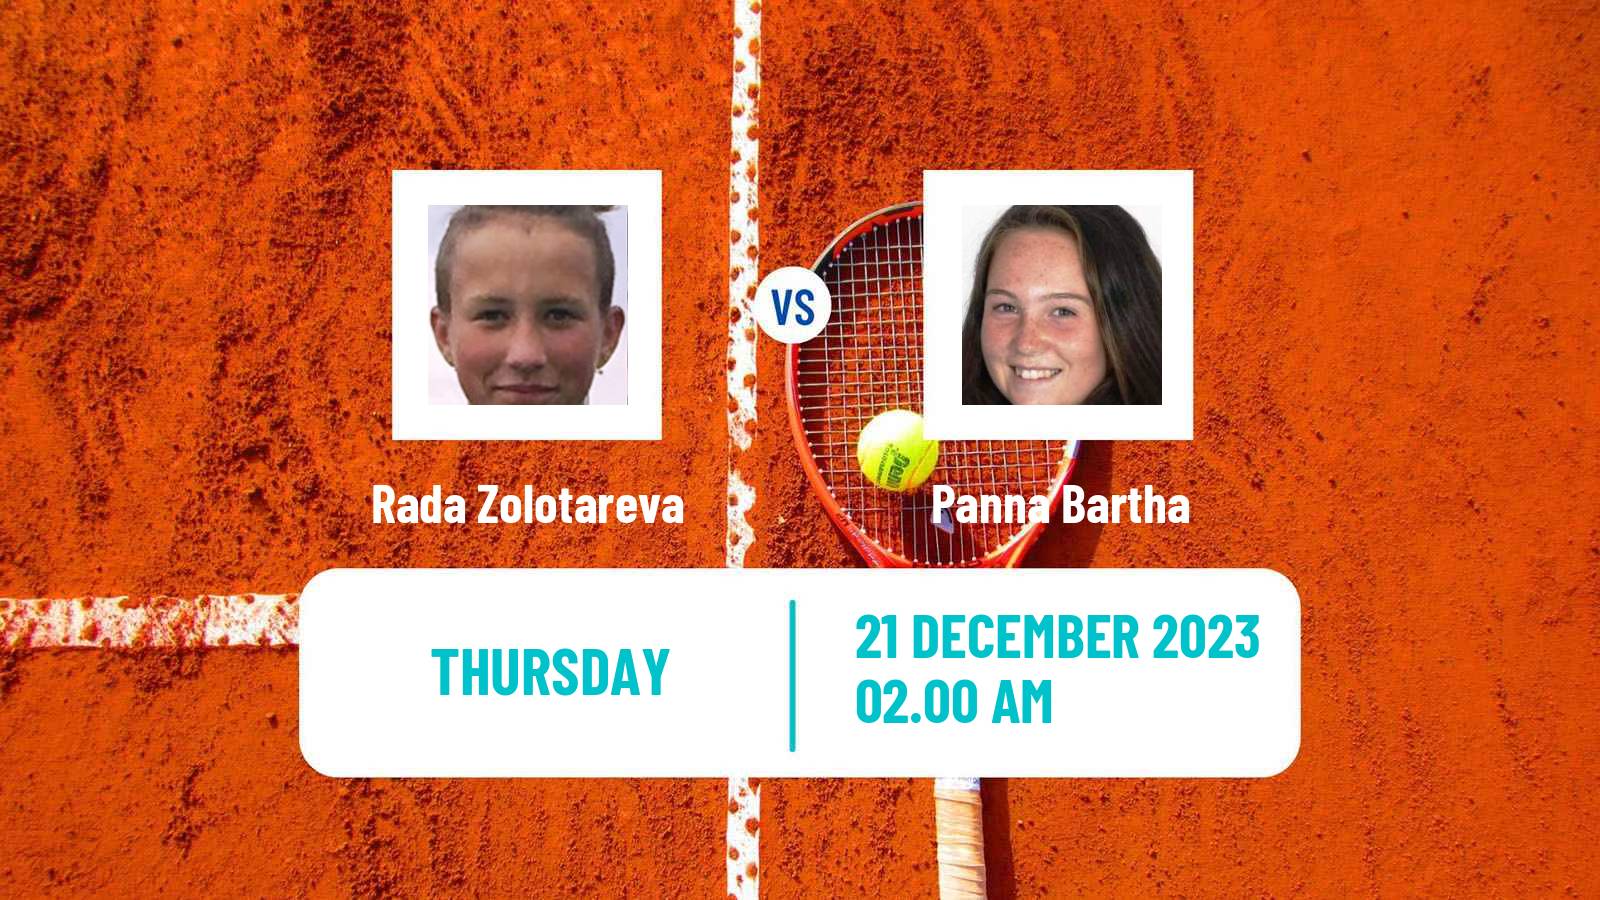 Tennis ITF W15 Antalya 23 Women Rada Zolotareva - Panna Bartha